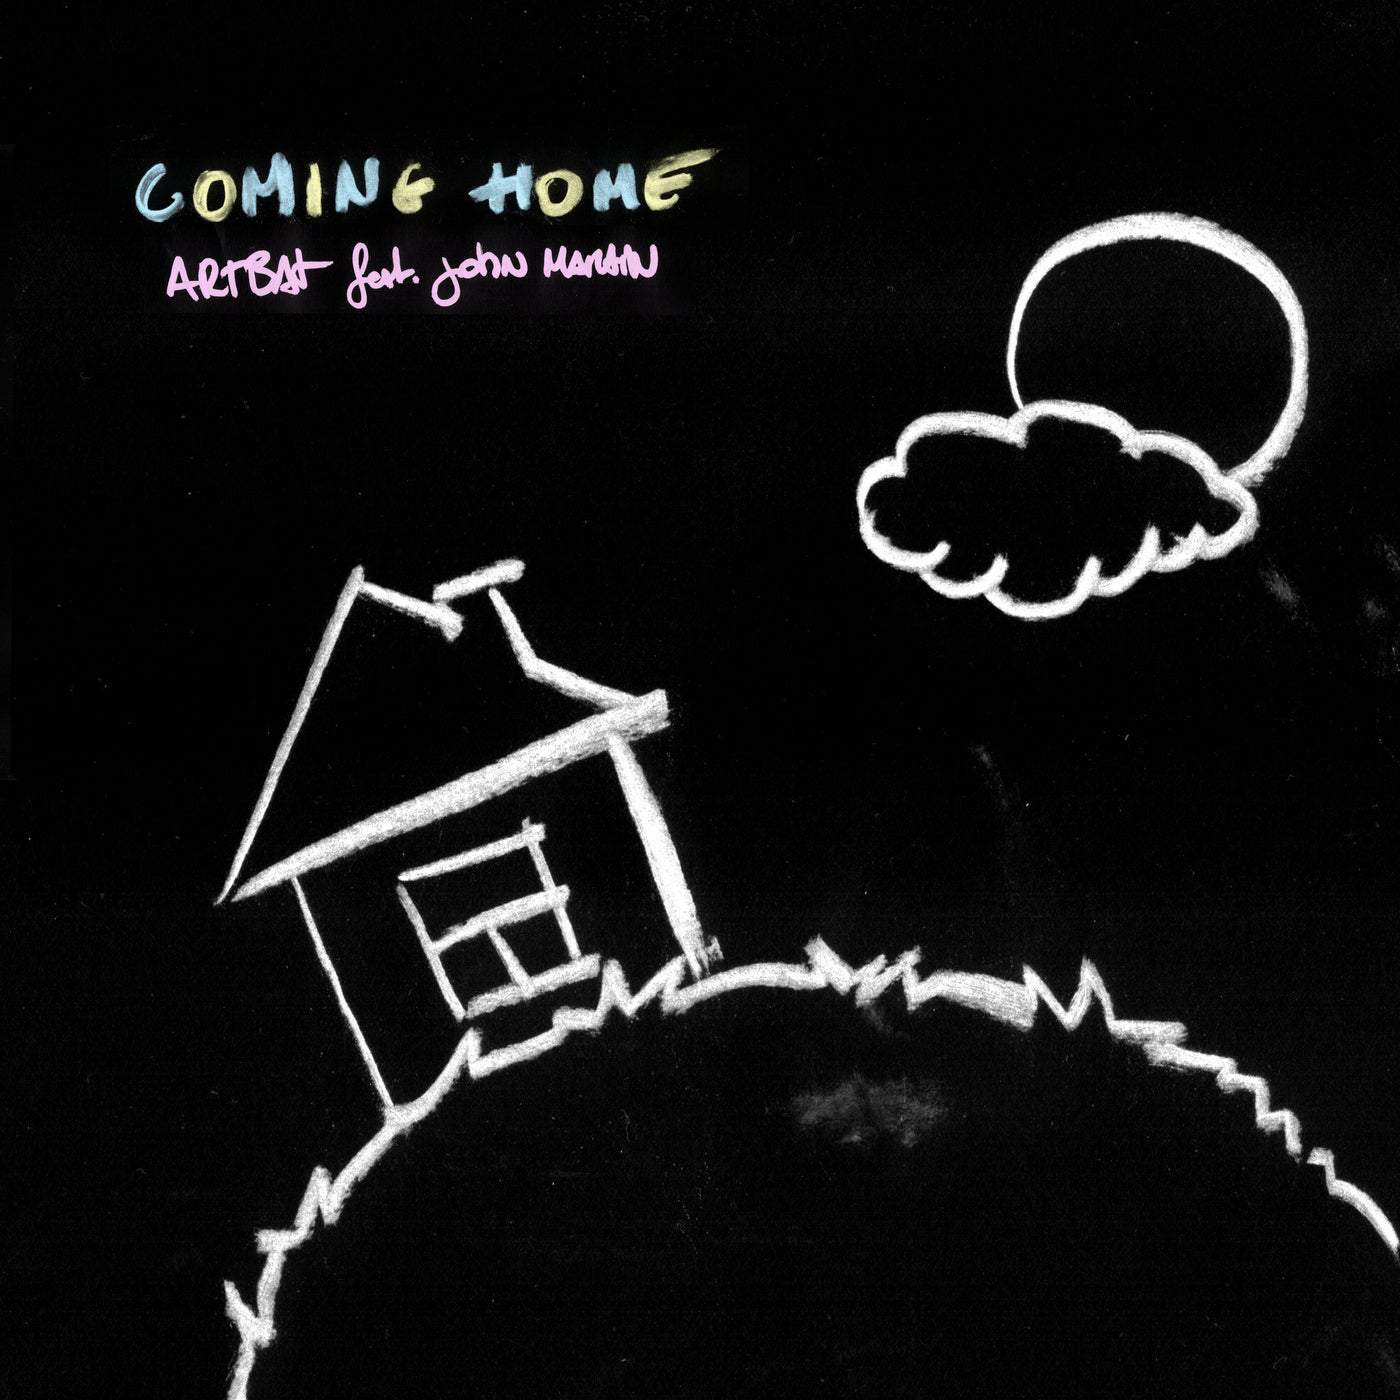 Release Cover: John Martin, ARTBAT - Coming Home (feat. John Martin) on Electrobuzz